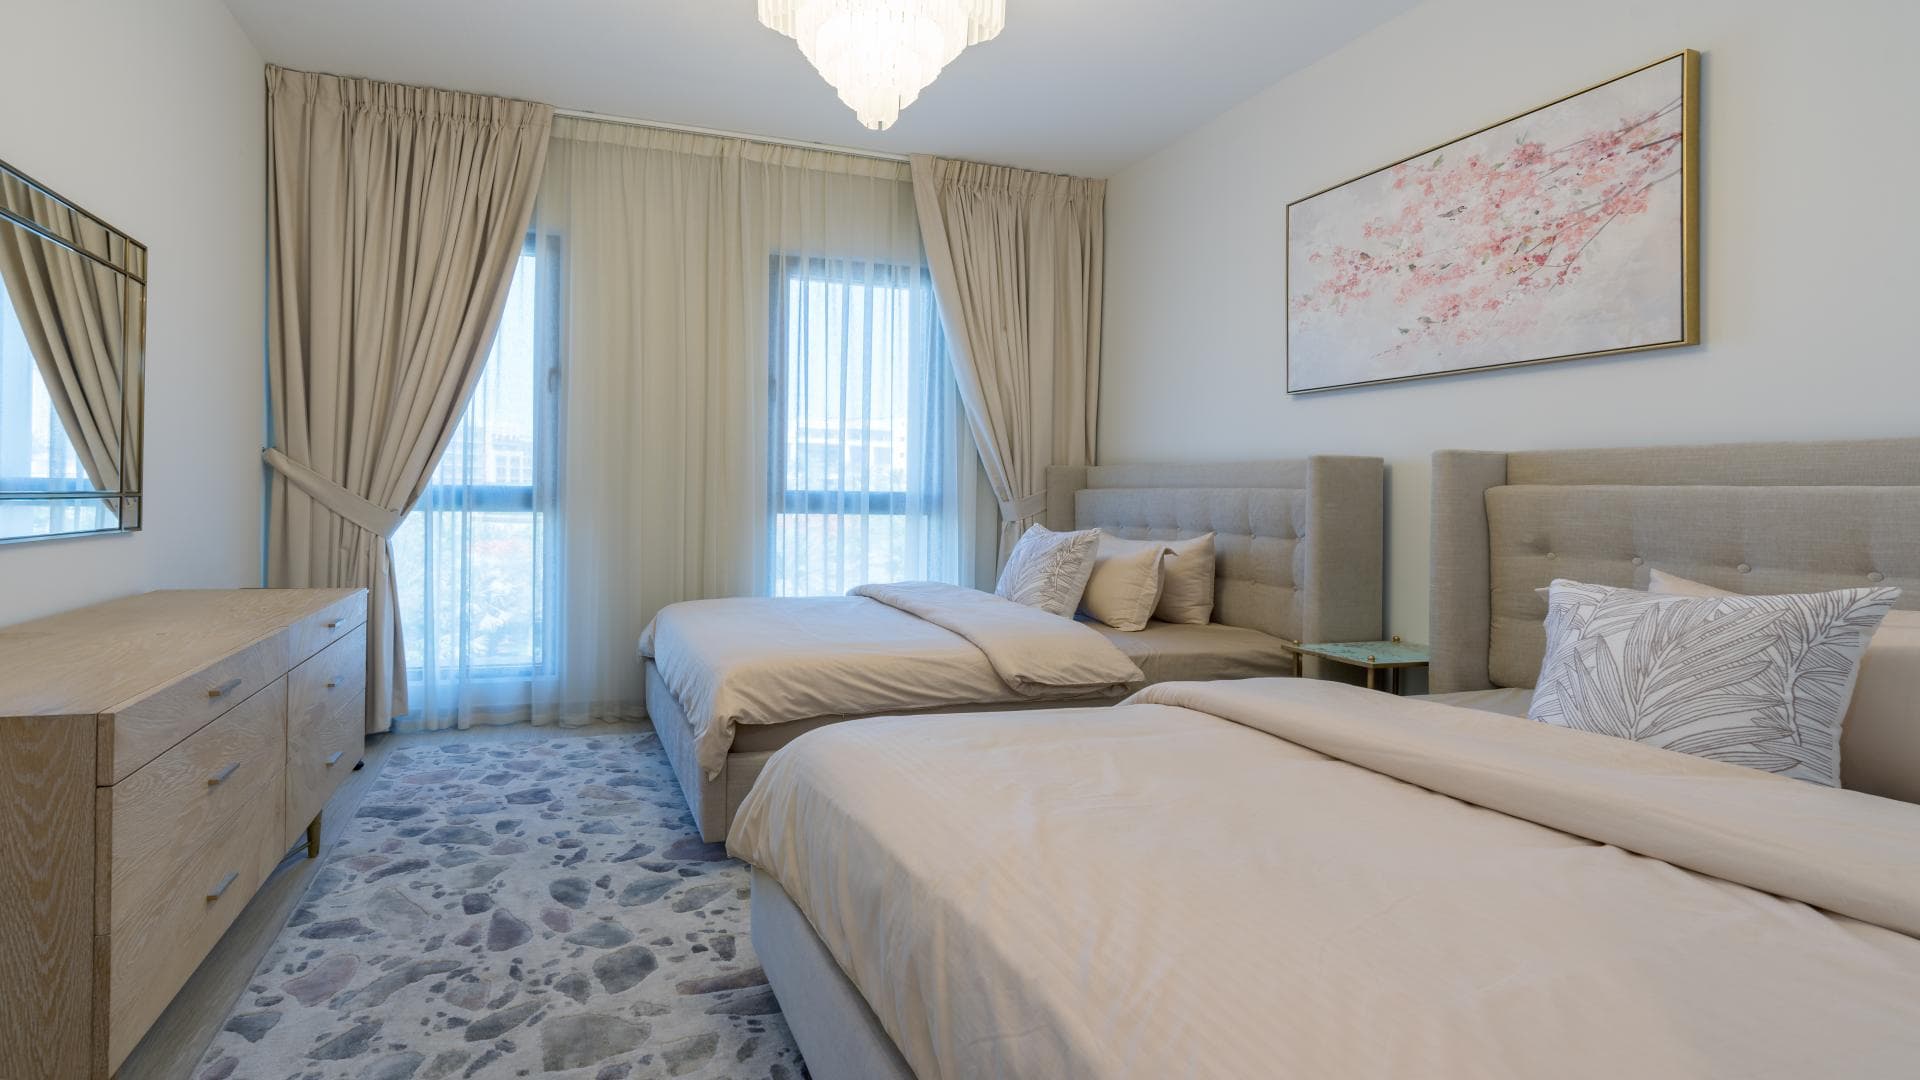 3 Bedroom Apartment For Rent Rahaal Lp36765 161c8cbdd3367f00.jpg